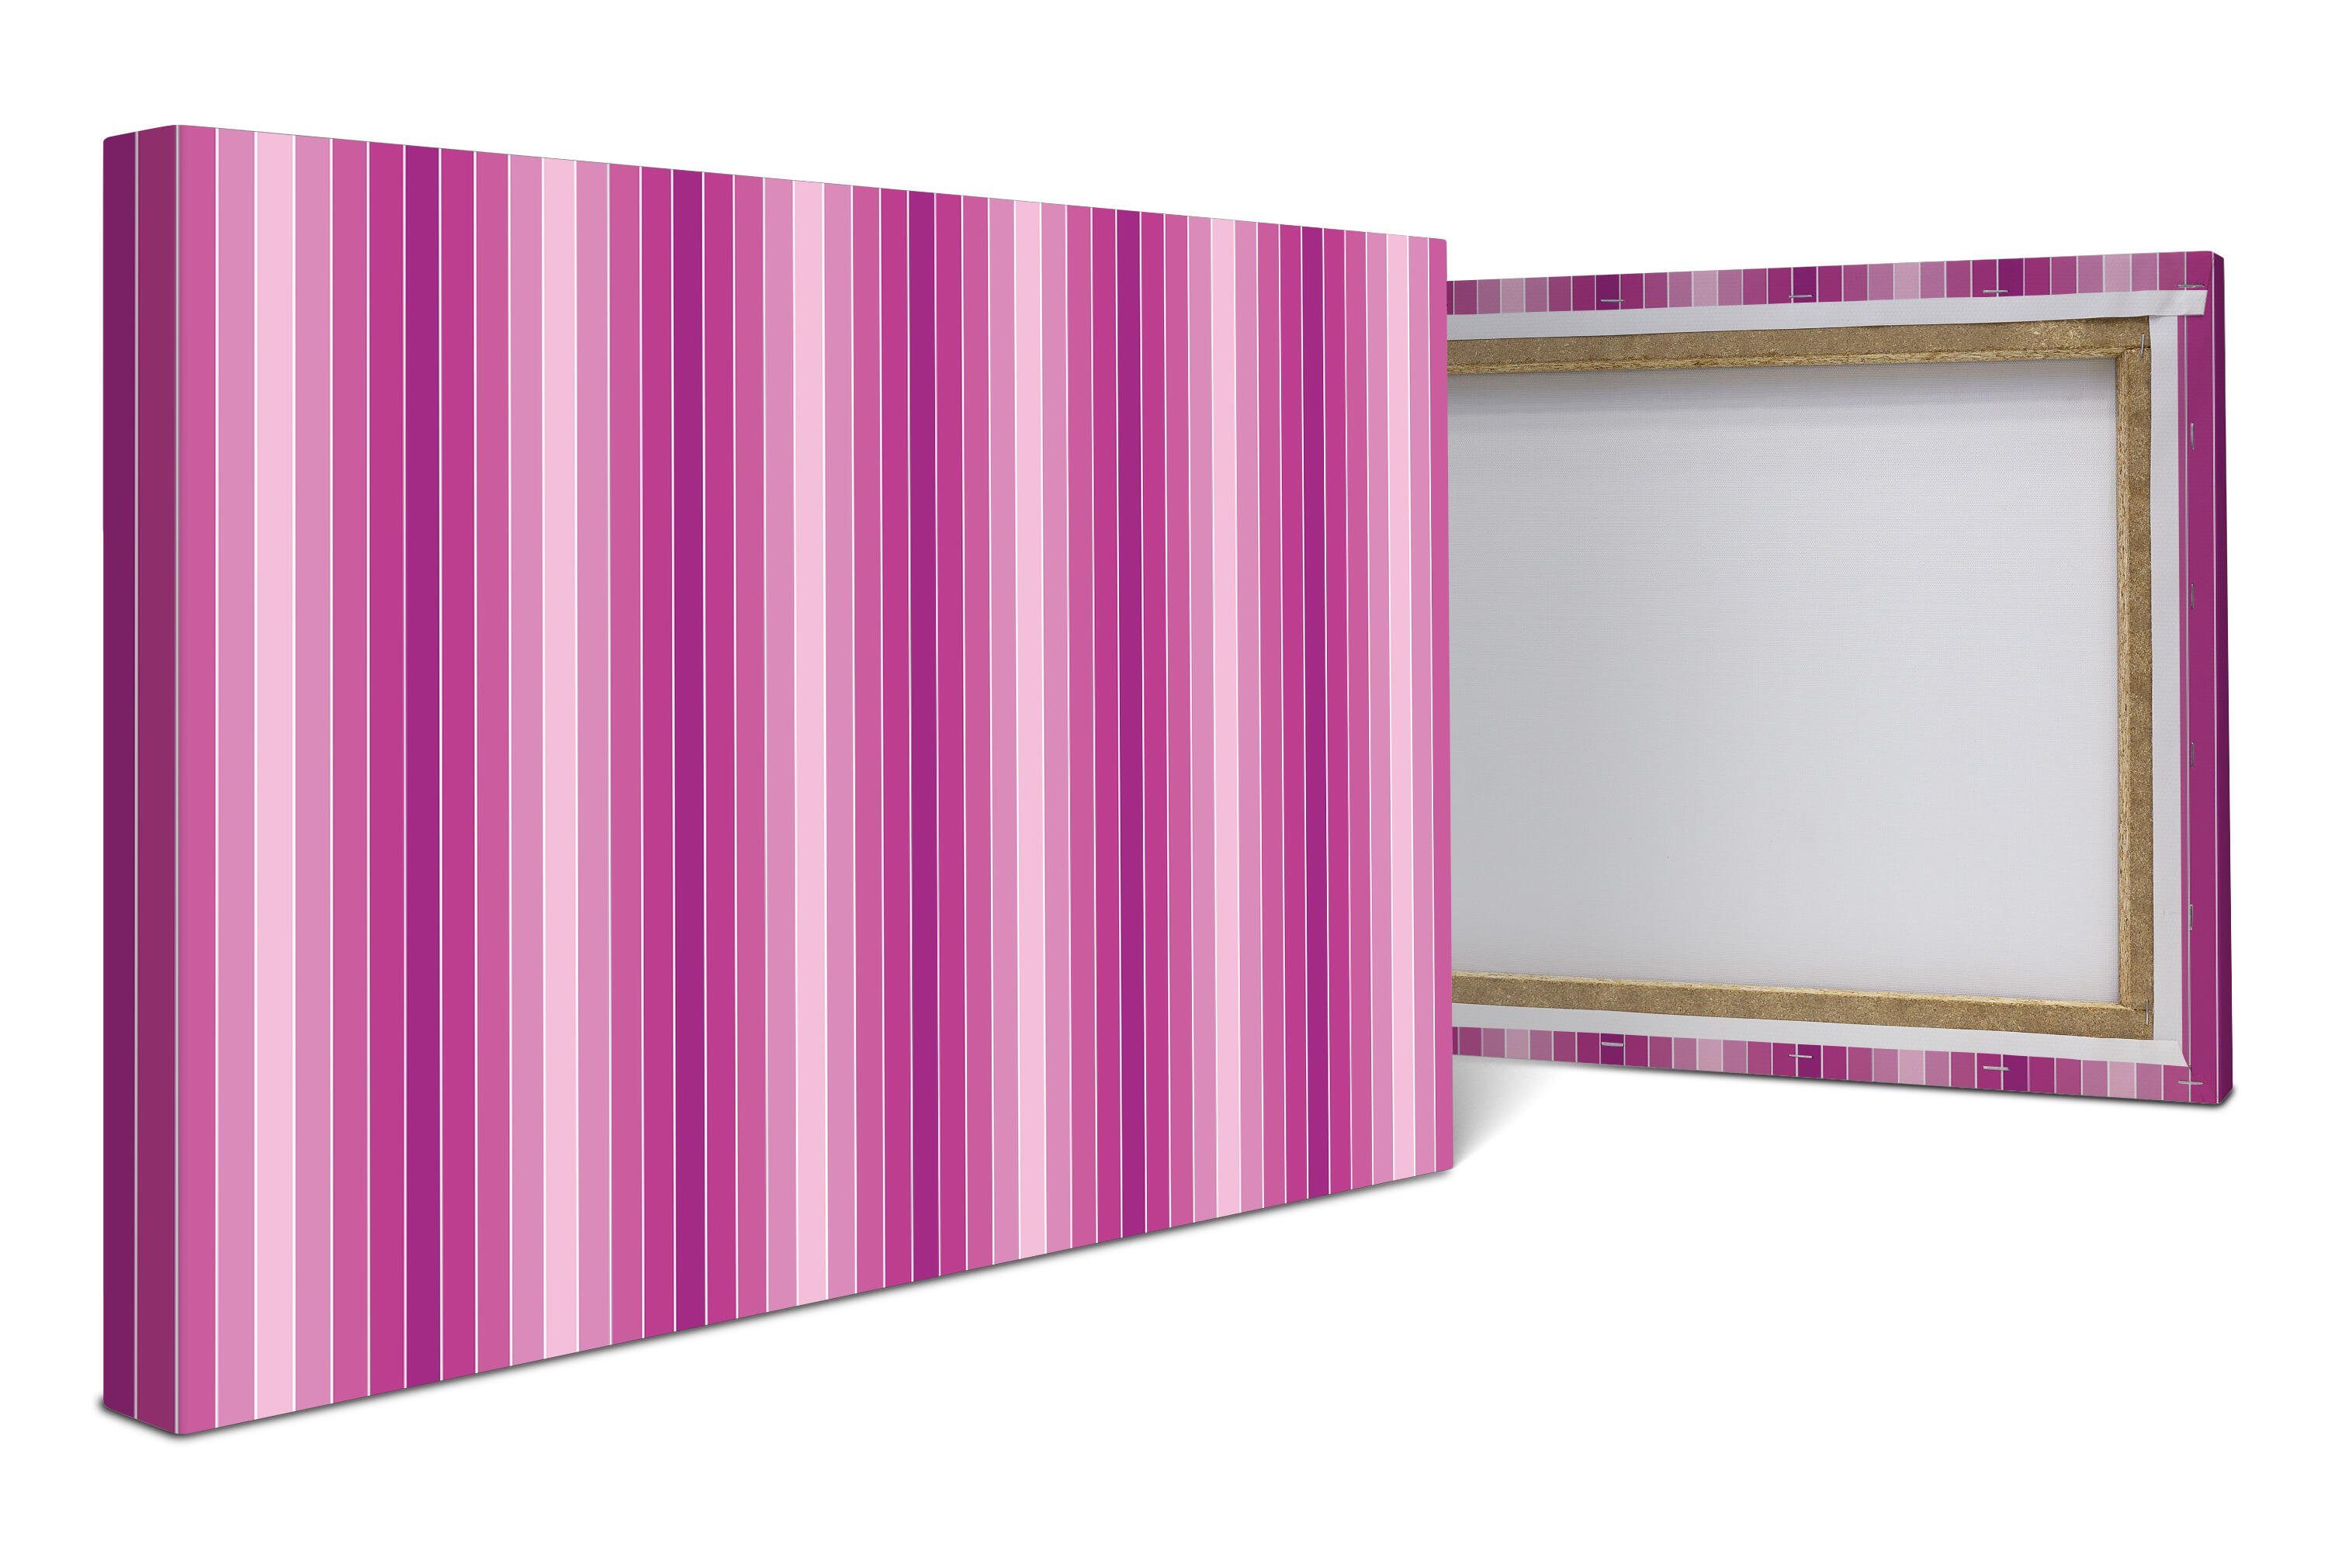 wandmotiv24 Leinwandbild Pink Muster, Abstrakt (1 St), Wandbild, Wanddeko, Leinwandbilder in versch. Größen